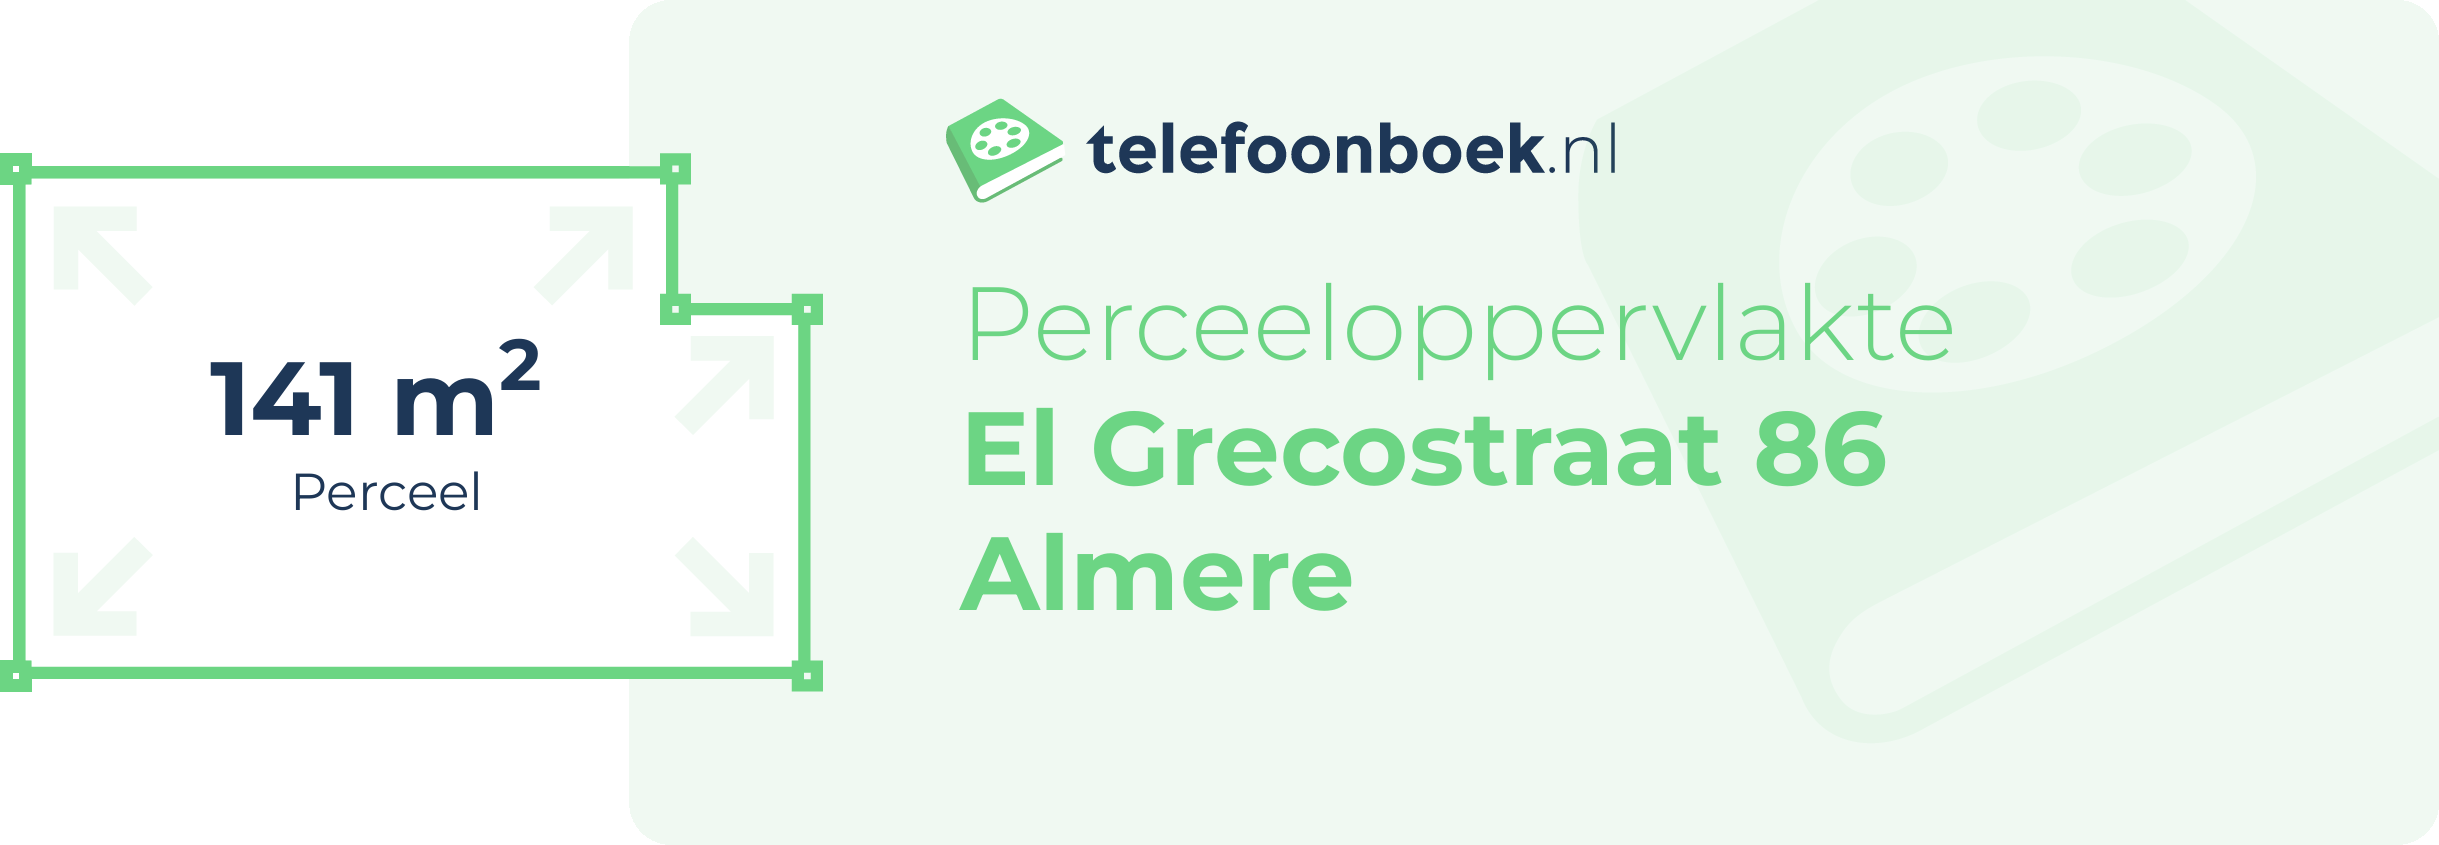 Perceeloppervlakte El Grecostraat 86 Almere